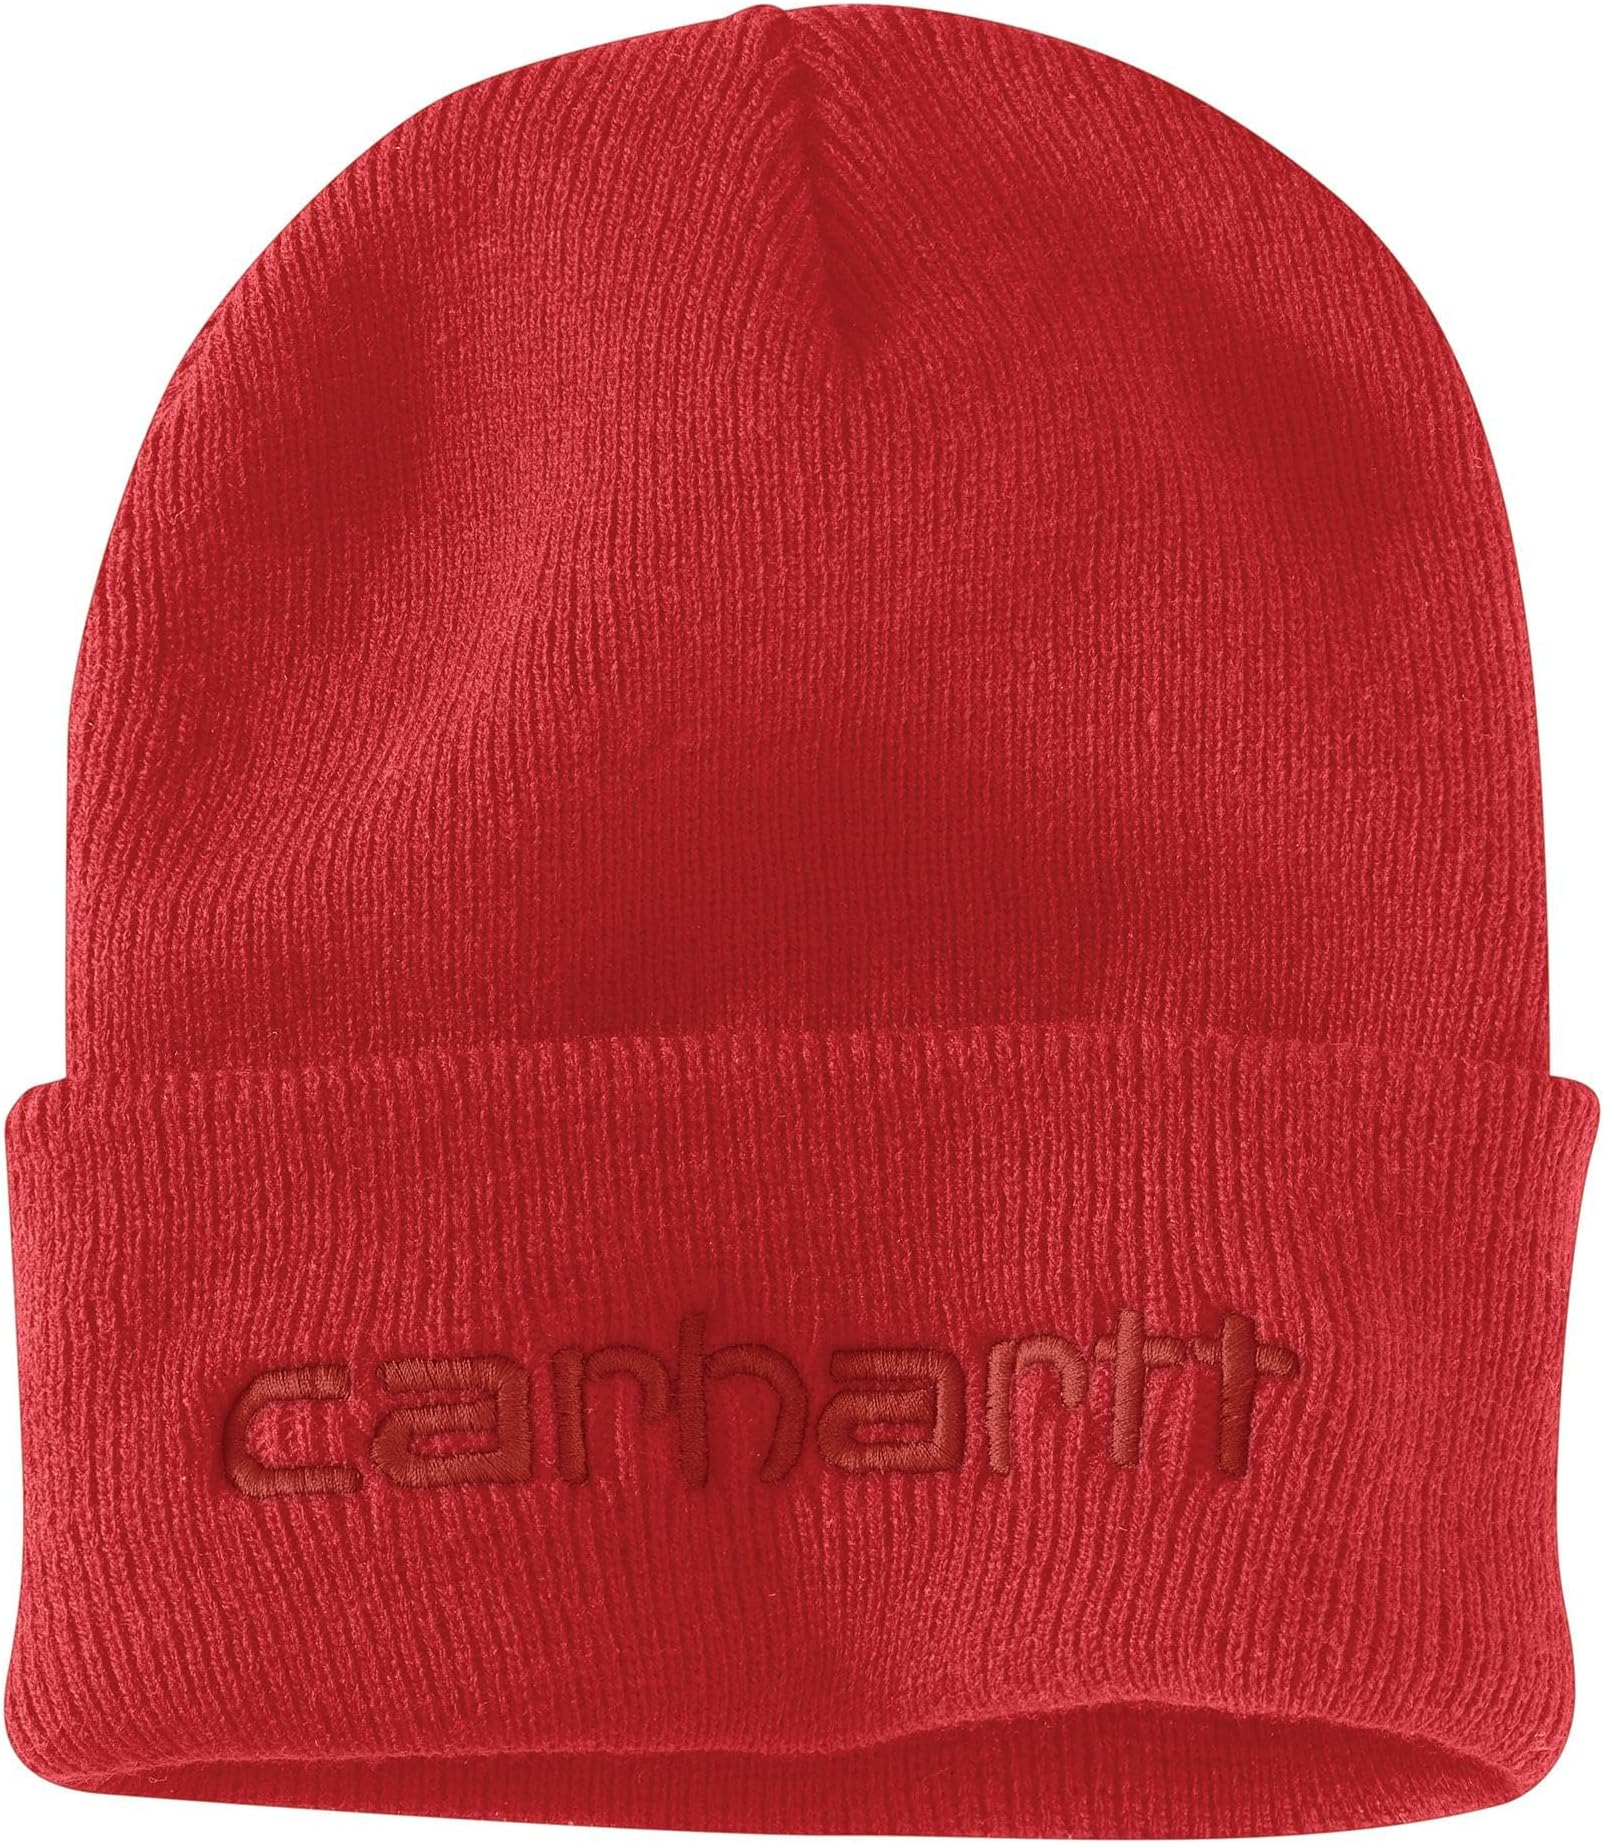 Вязаная утепленная шапка с логотипом и графическим манжетом Carhartt, цвет Red Barn адаптер barn